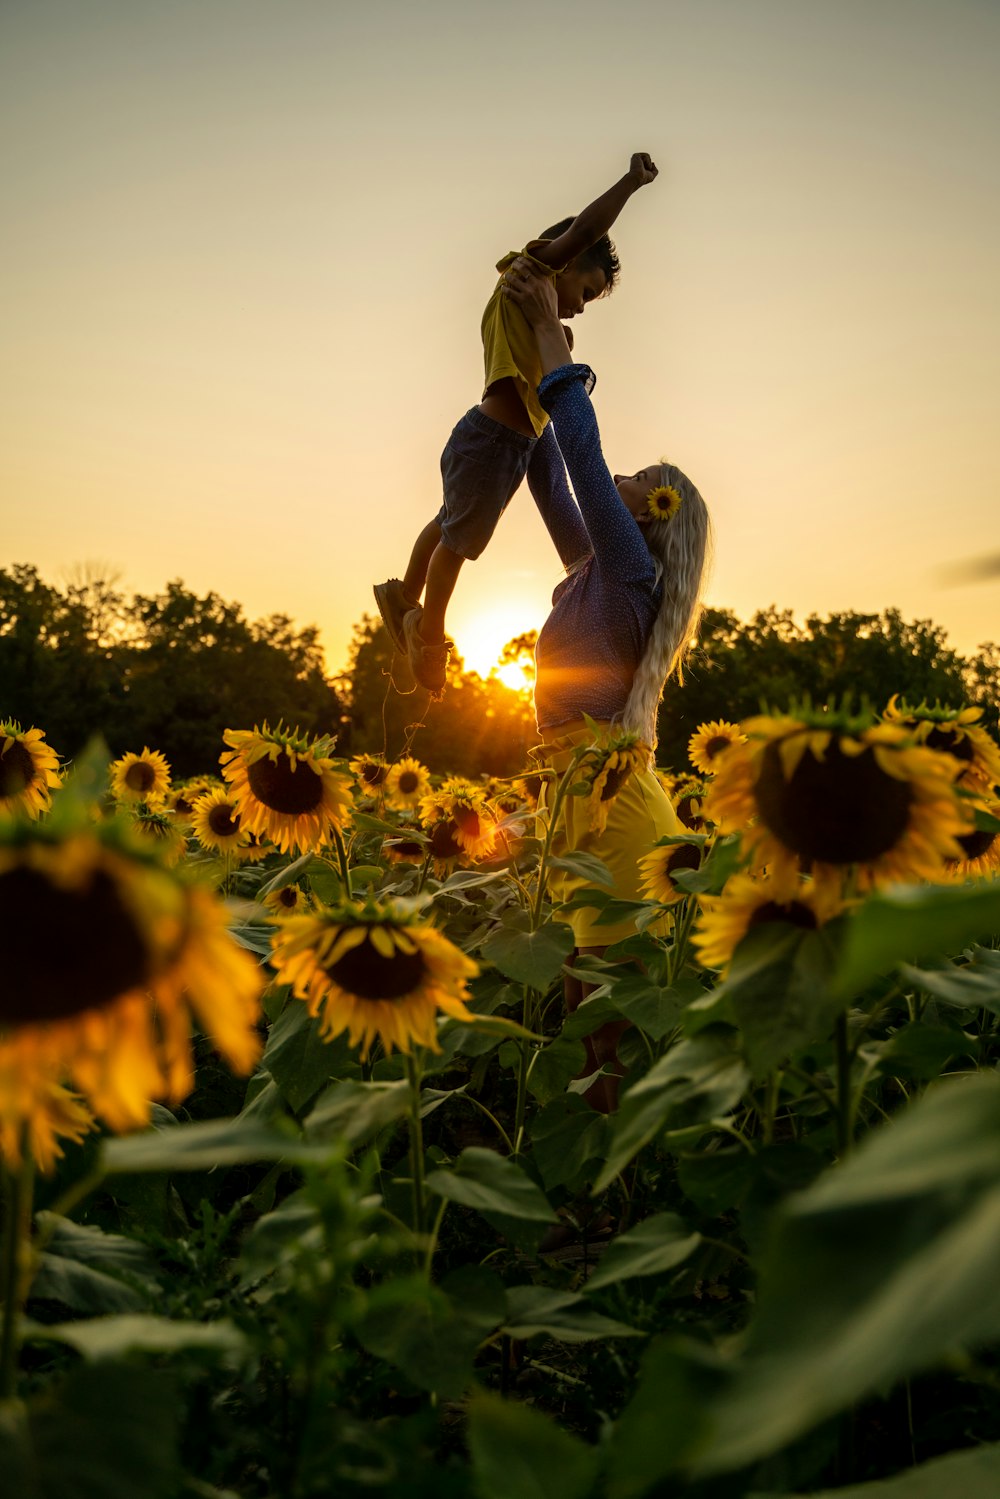 woman carrying child near sunflower field